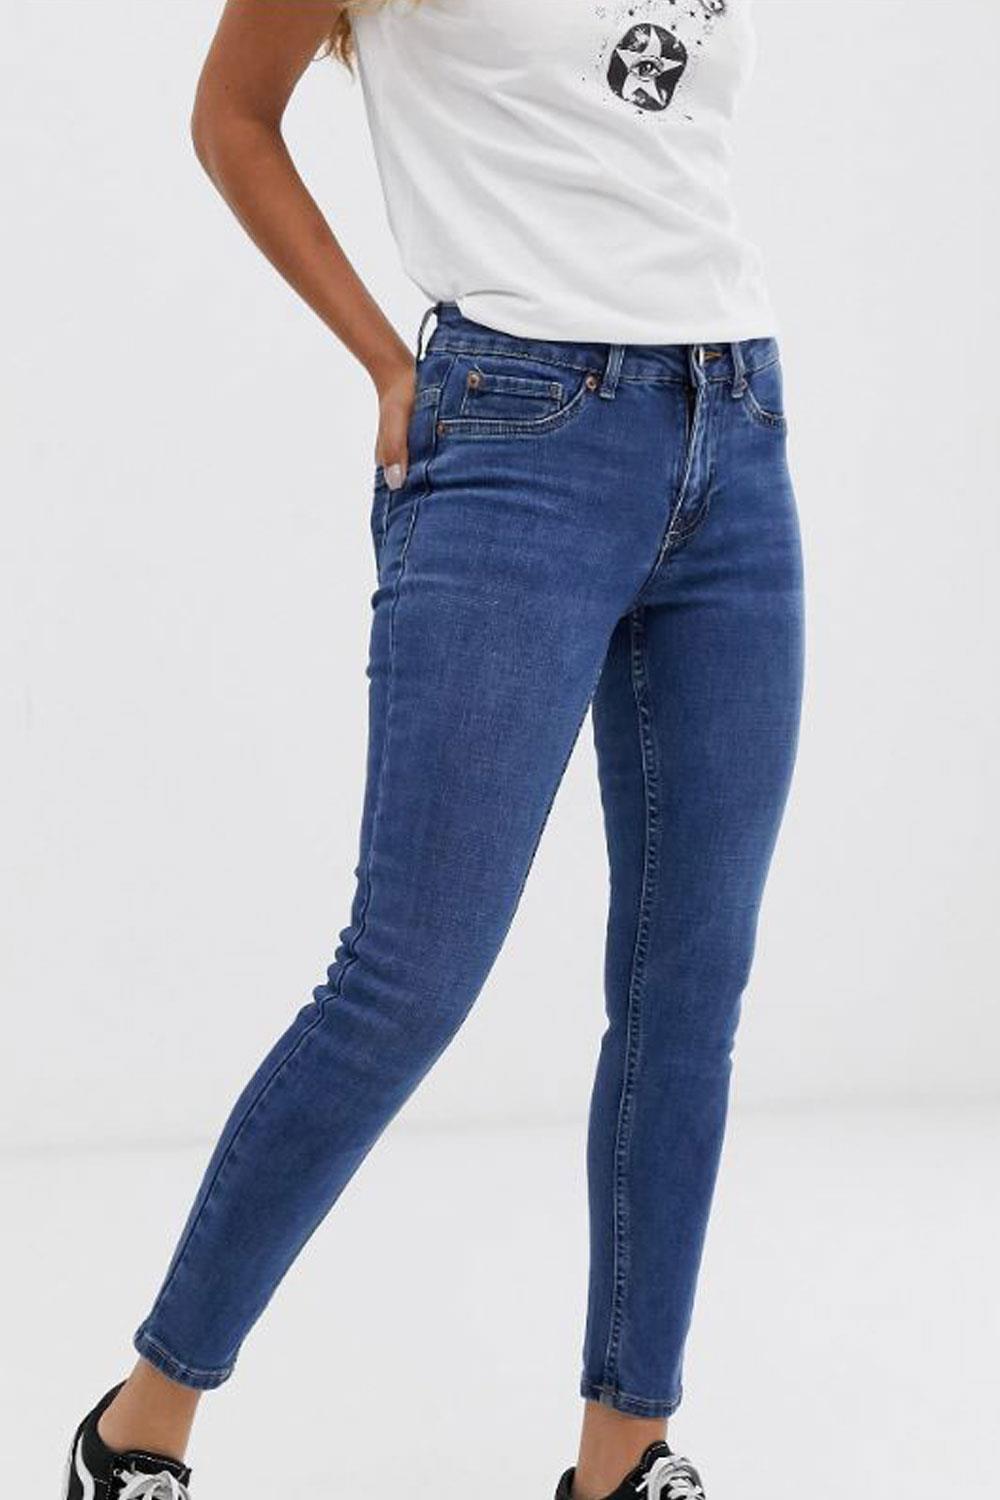 jeans low cost pantalones vaqueros New Look Petite, 20,99€